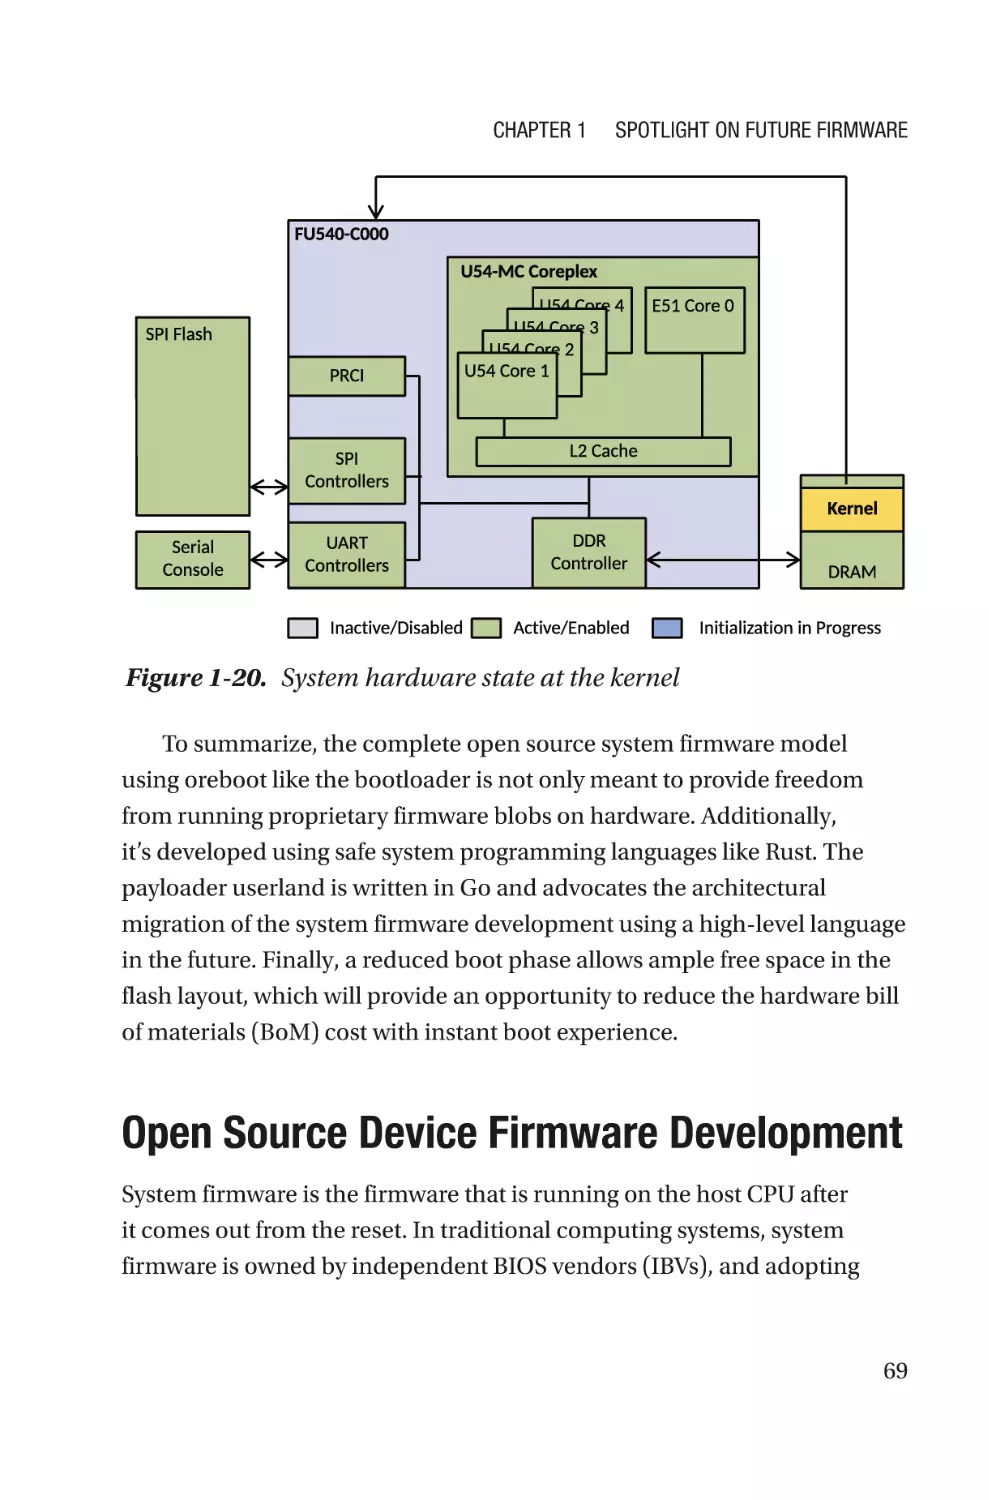 Open Source Device Firmware Development